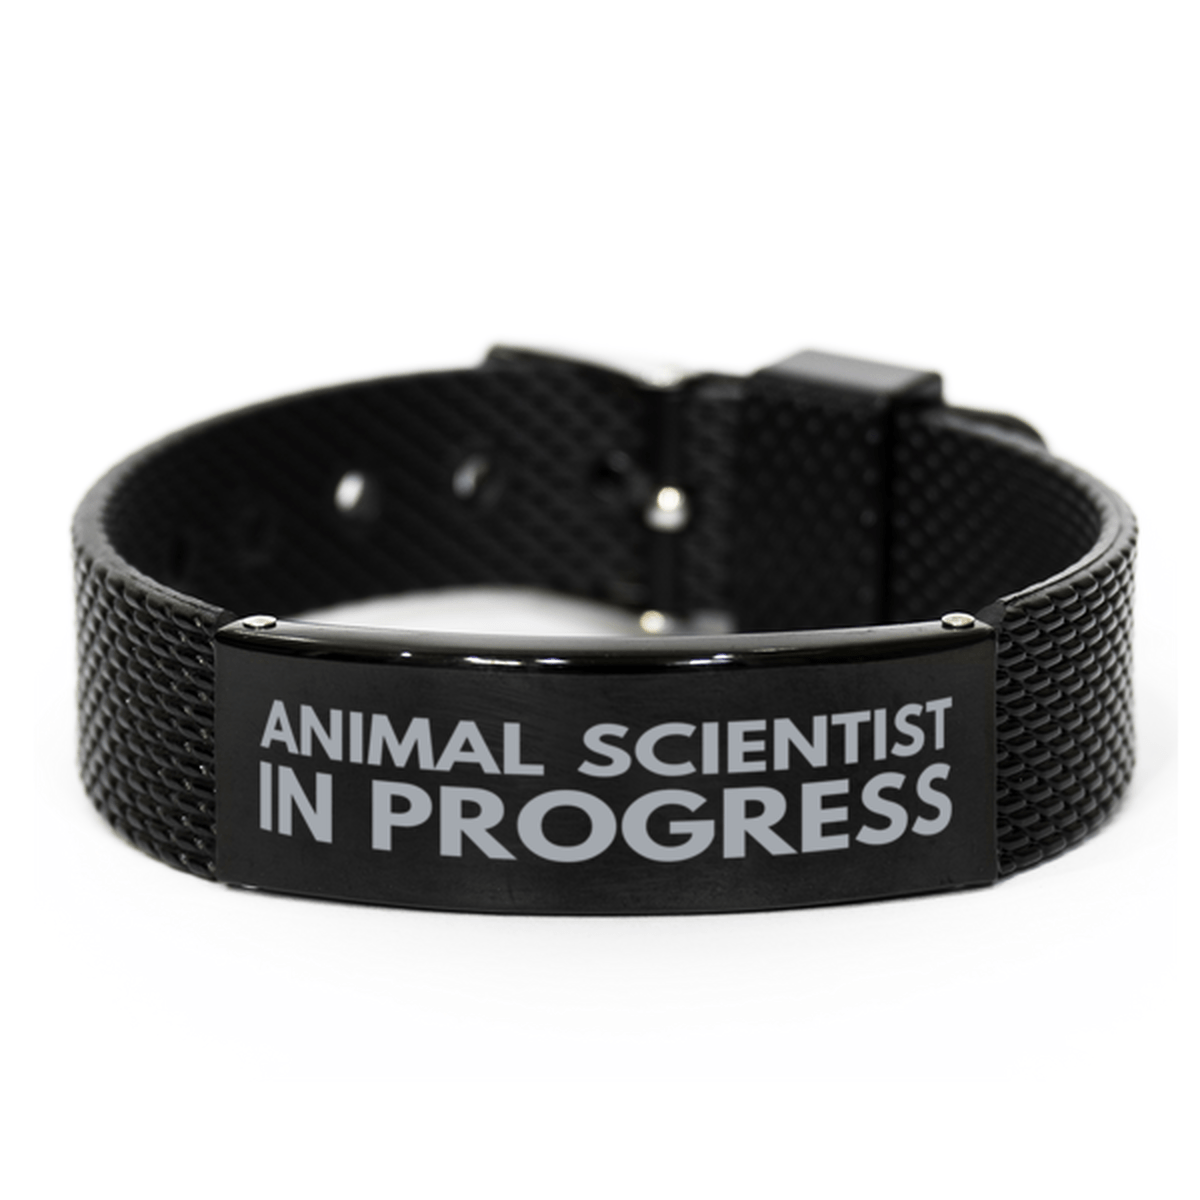 Inspirational Animal Scientist Black Shark Mesh Bracelet, Animal Scientist In Progress, Best Graduation Gifts for Students